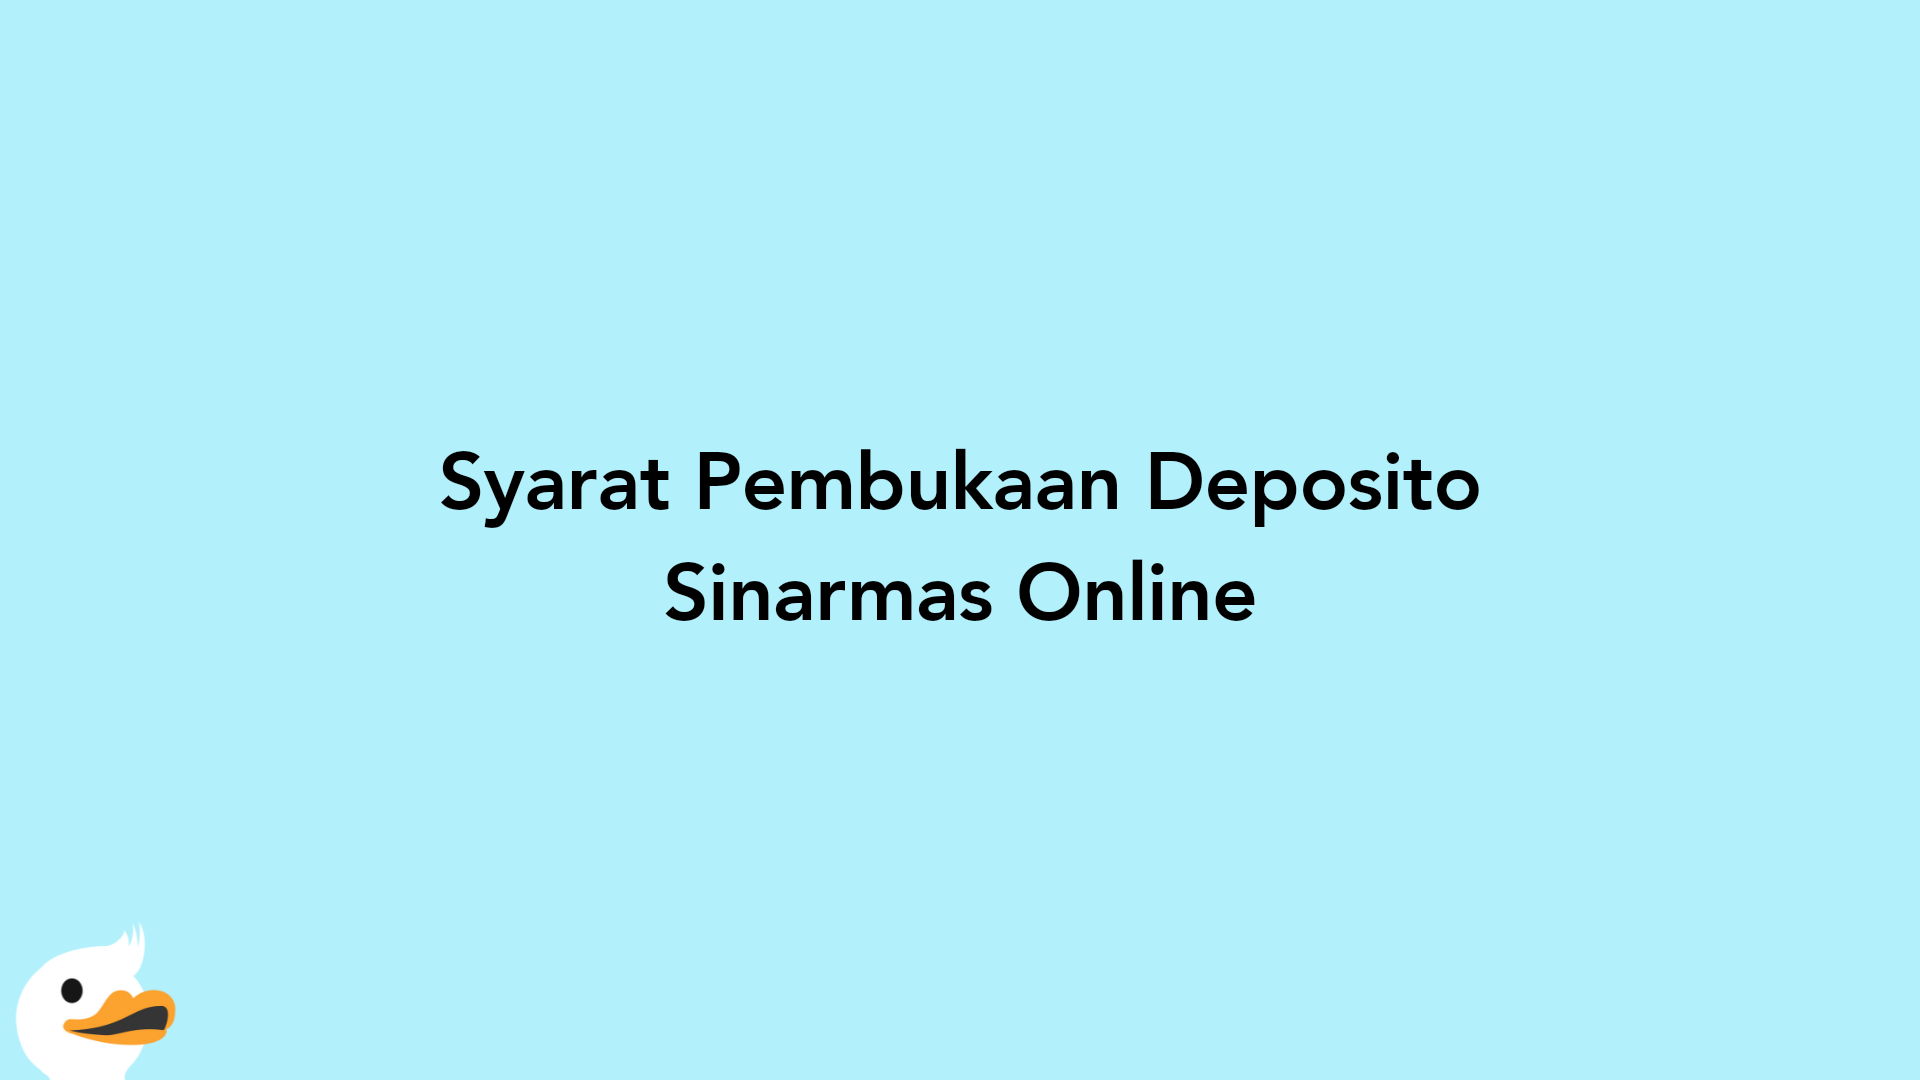 Syarat Pembukaan Deposito Sinarmas Online